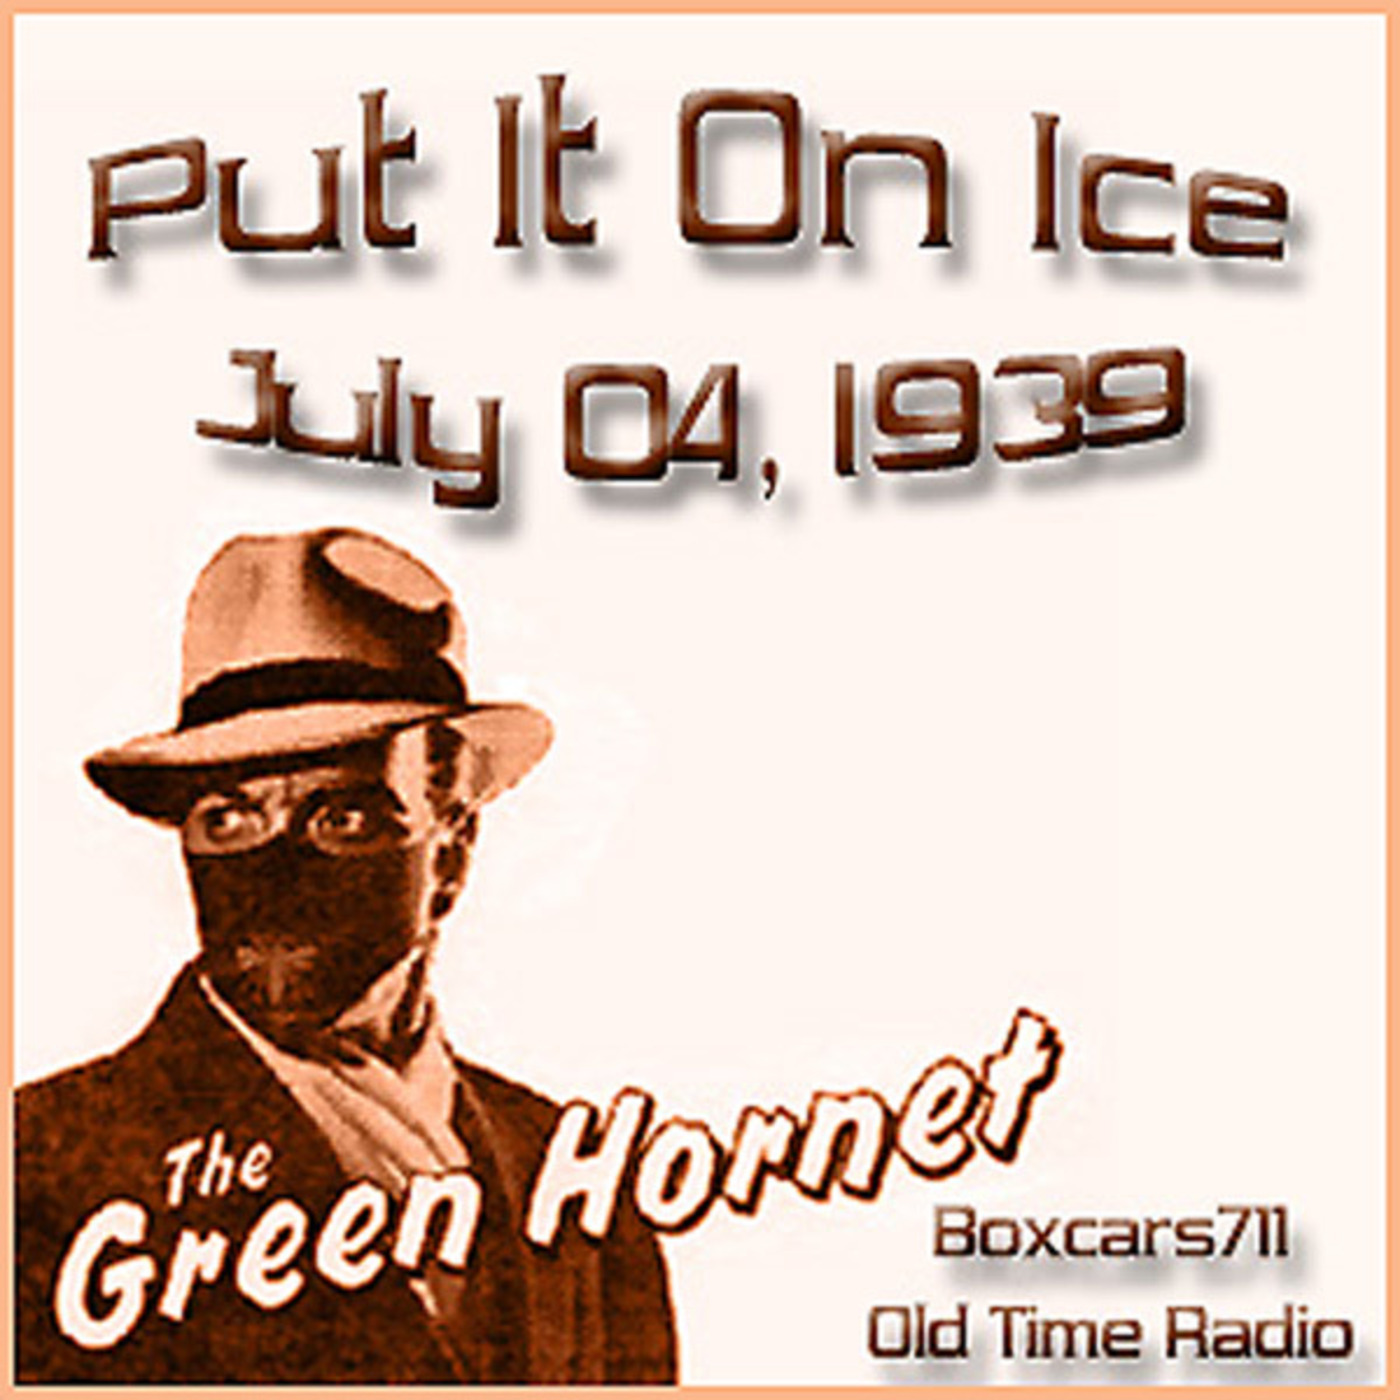 Episode 9663: The Green Hornet - 